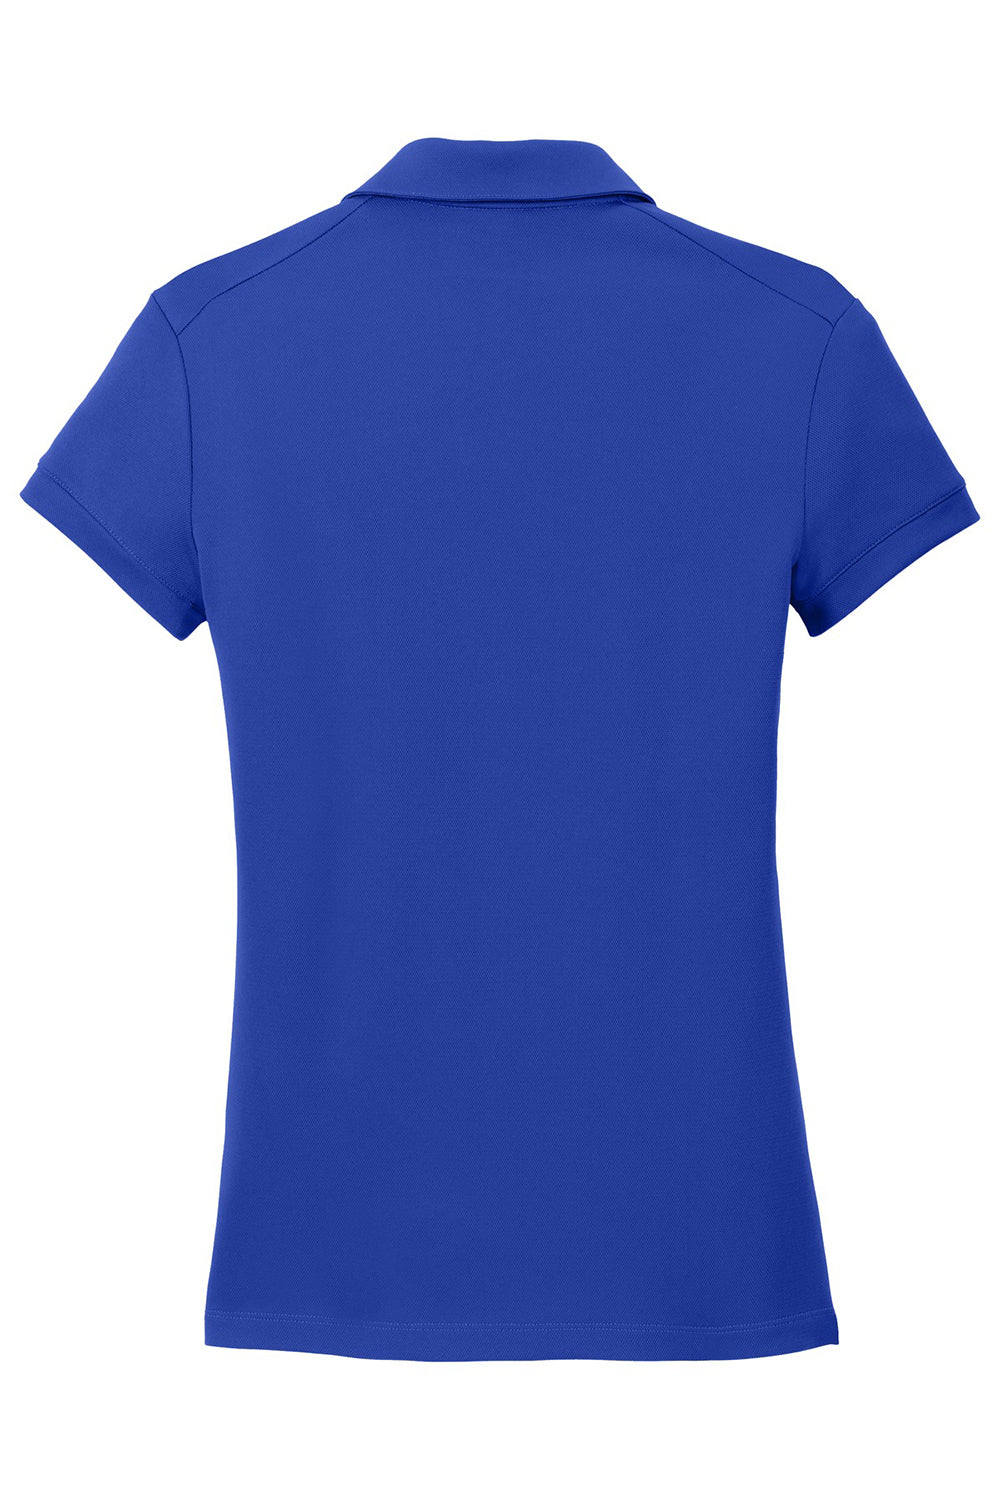 Nike 746100 Womens Icon Dri-Fit Moisture Wicking Short Sleeve Polo Shirt Royal Blue Flat Back